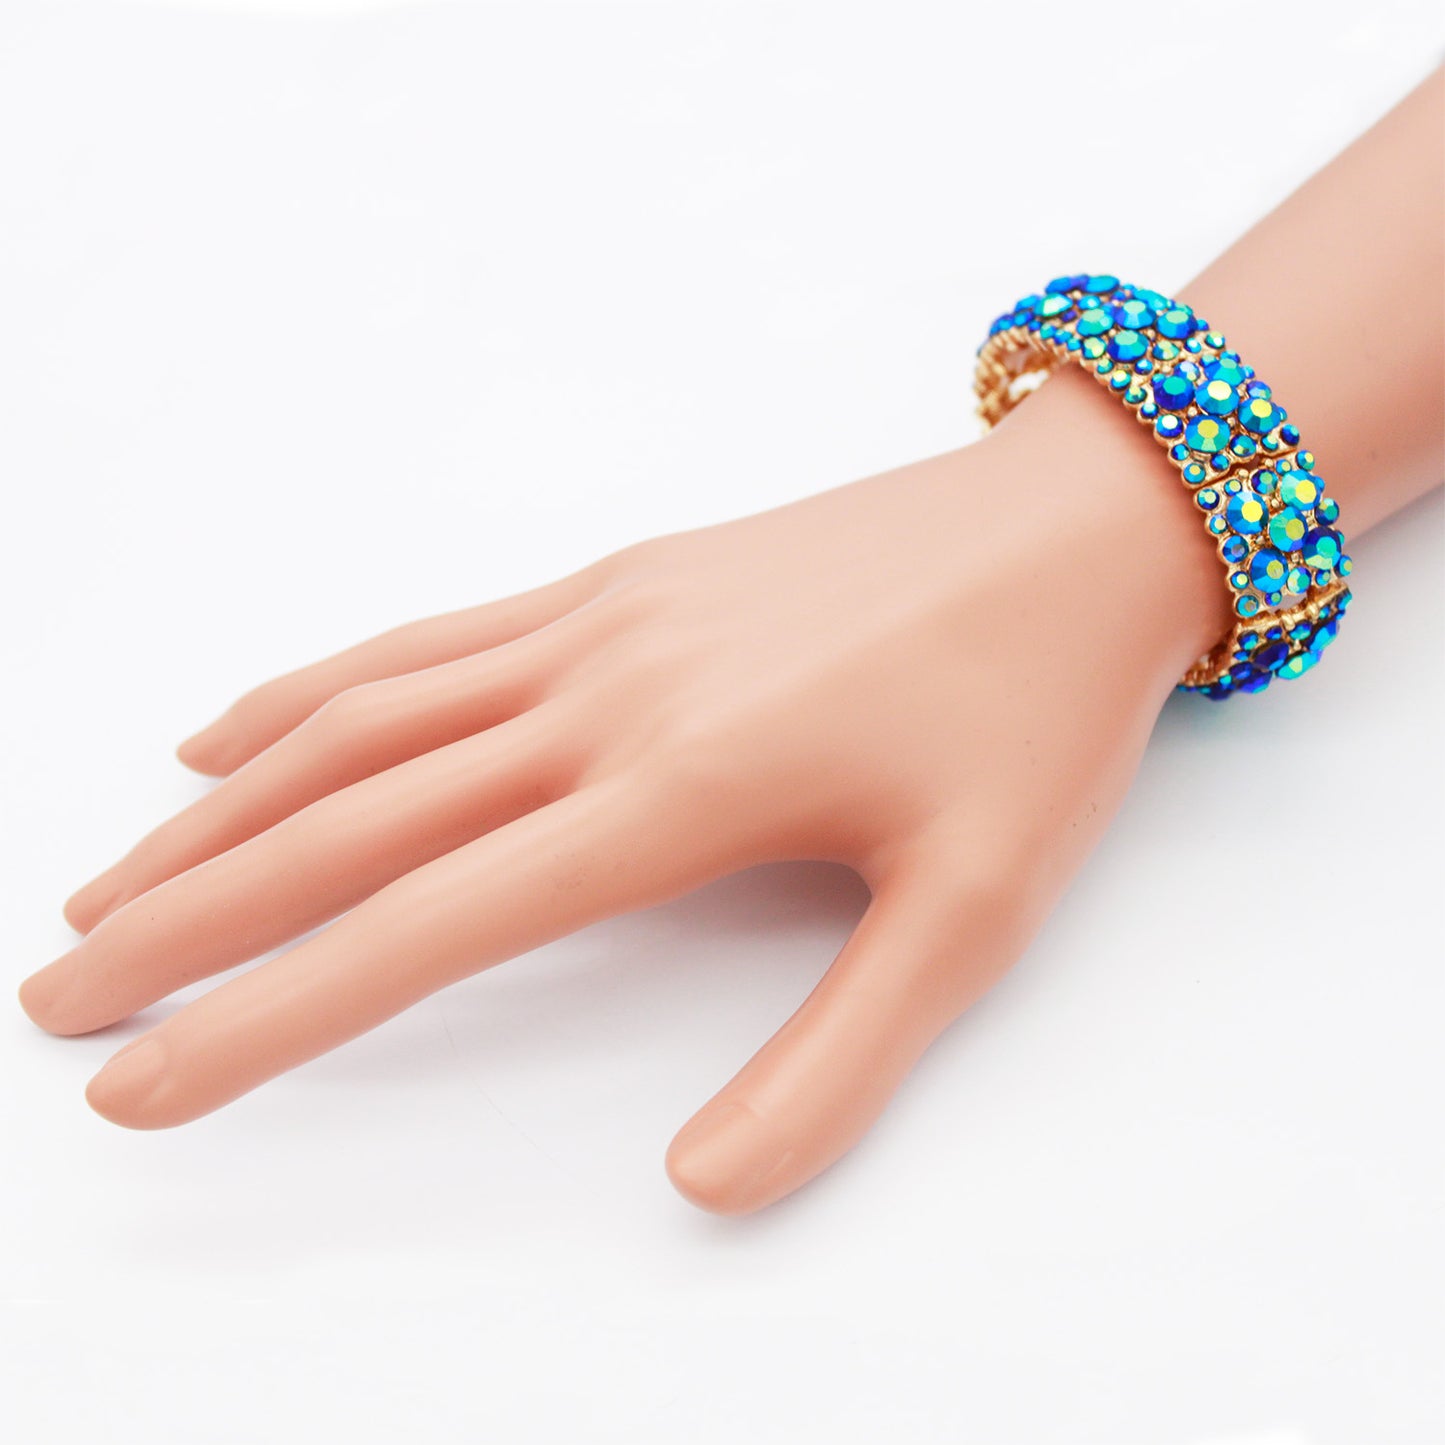 Lavencious Round Shape Rhinestones Elastic Stretch Bracelet Party Jewelry for Women 7"(Blue AB)